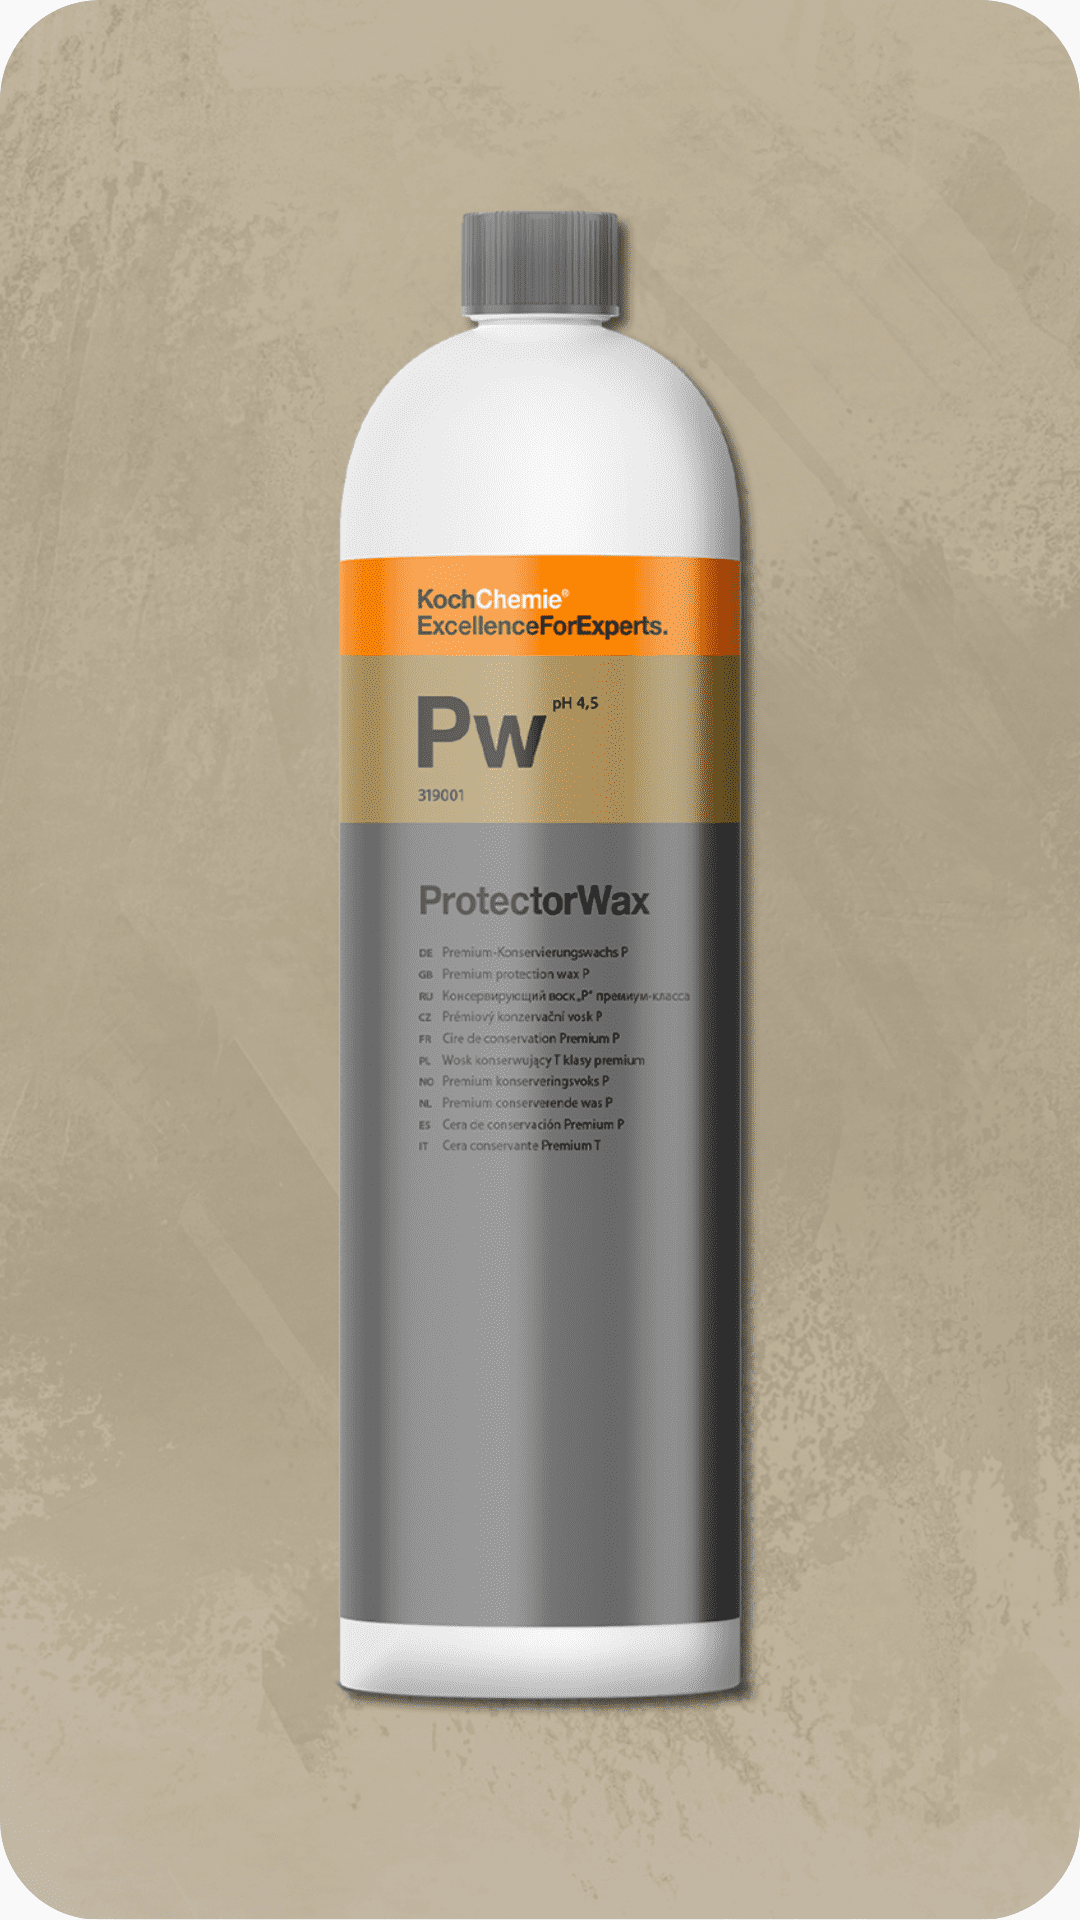 Koch Chemie Protector Wax "PW" 1L - Cera de Conservação